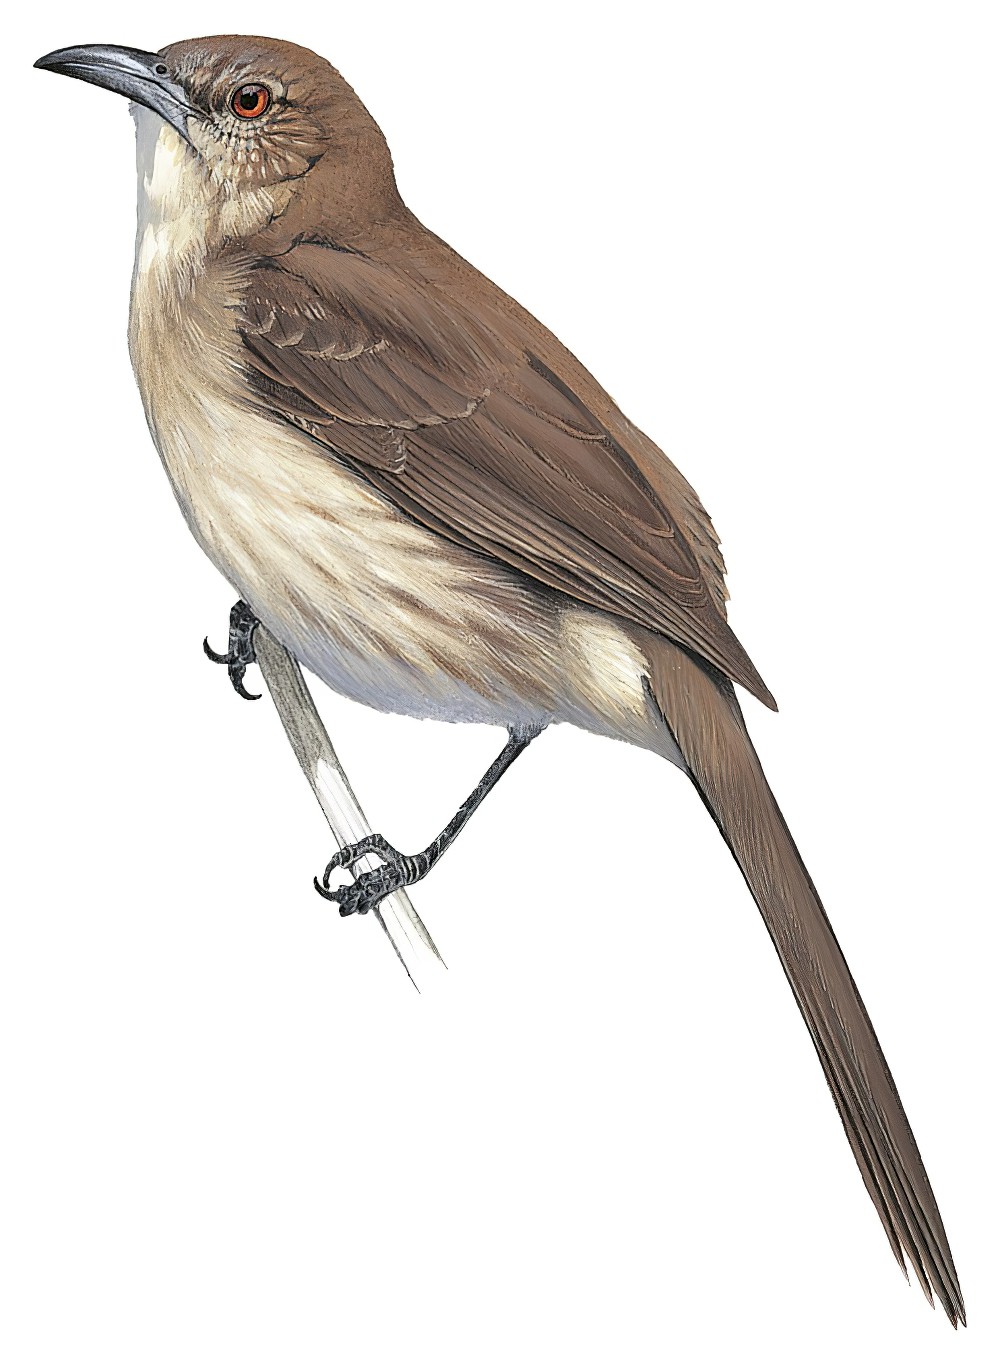 Socorro Mockingbird / Mimus graysoni